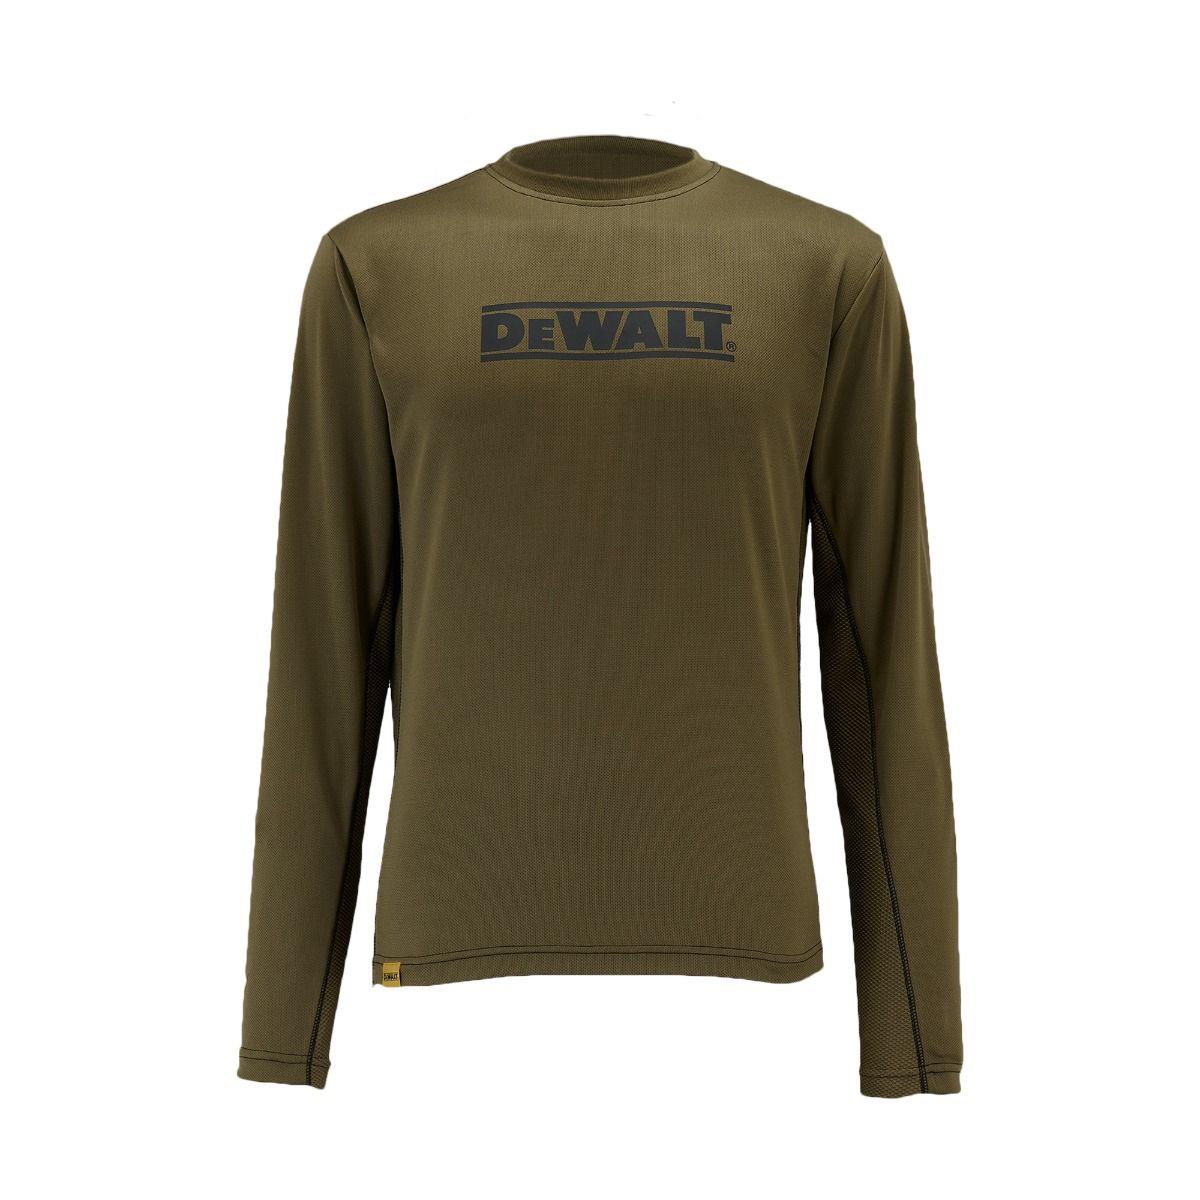 DeWalt Truro olive green lightweight long sleeve performance work t-shirt